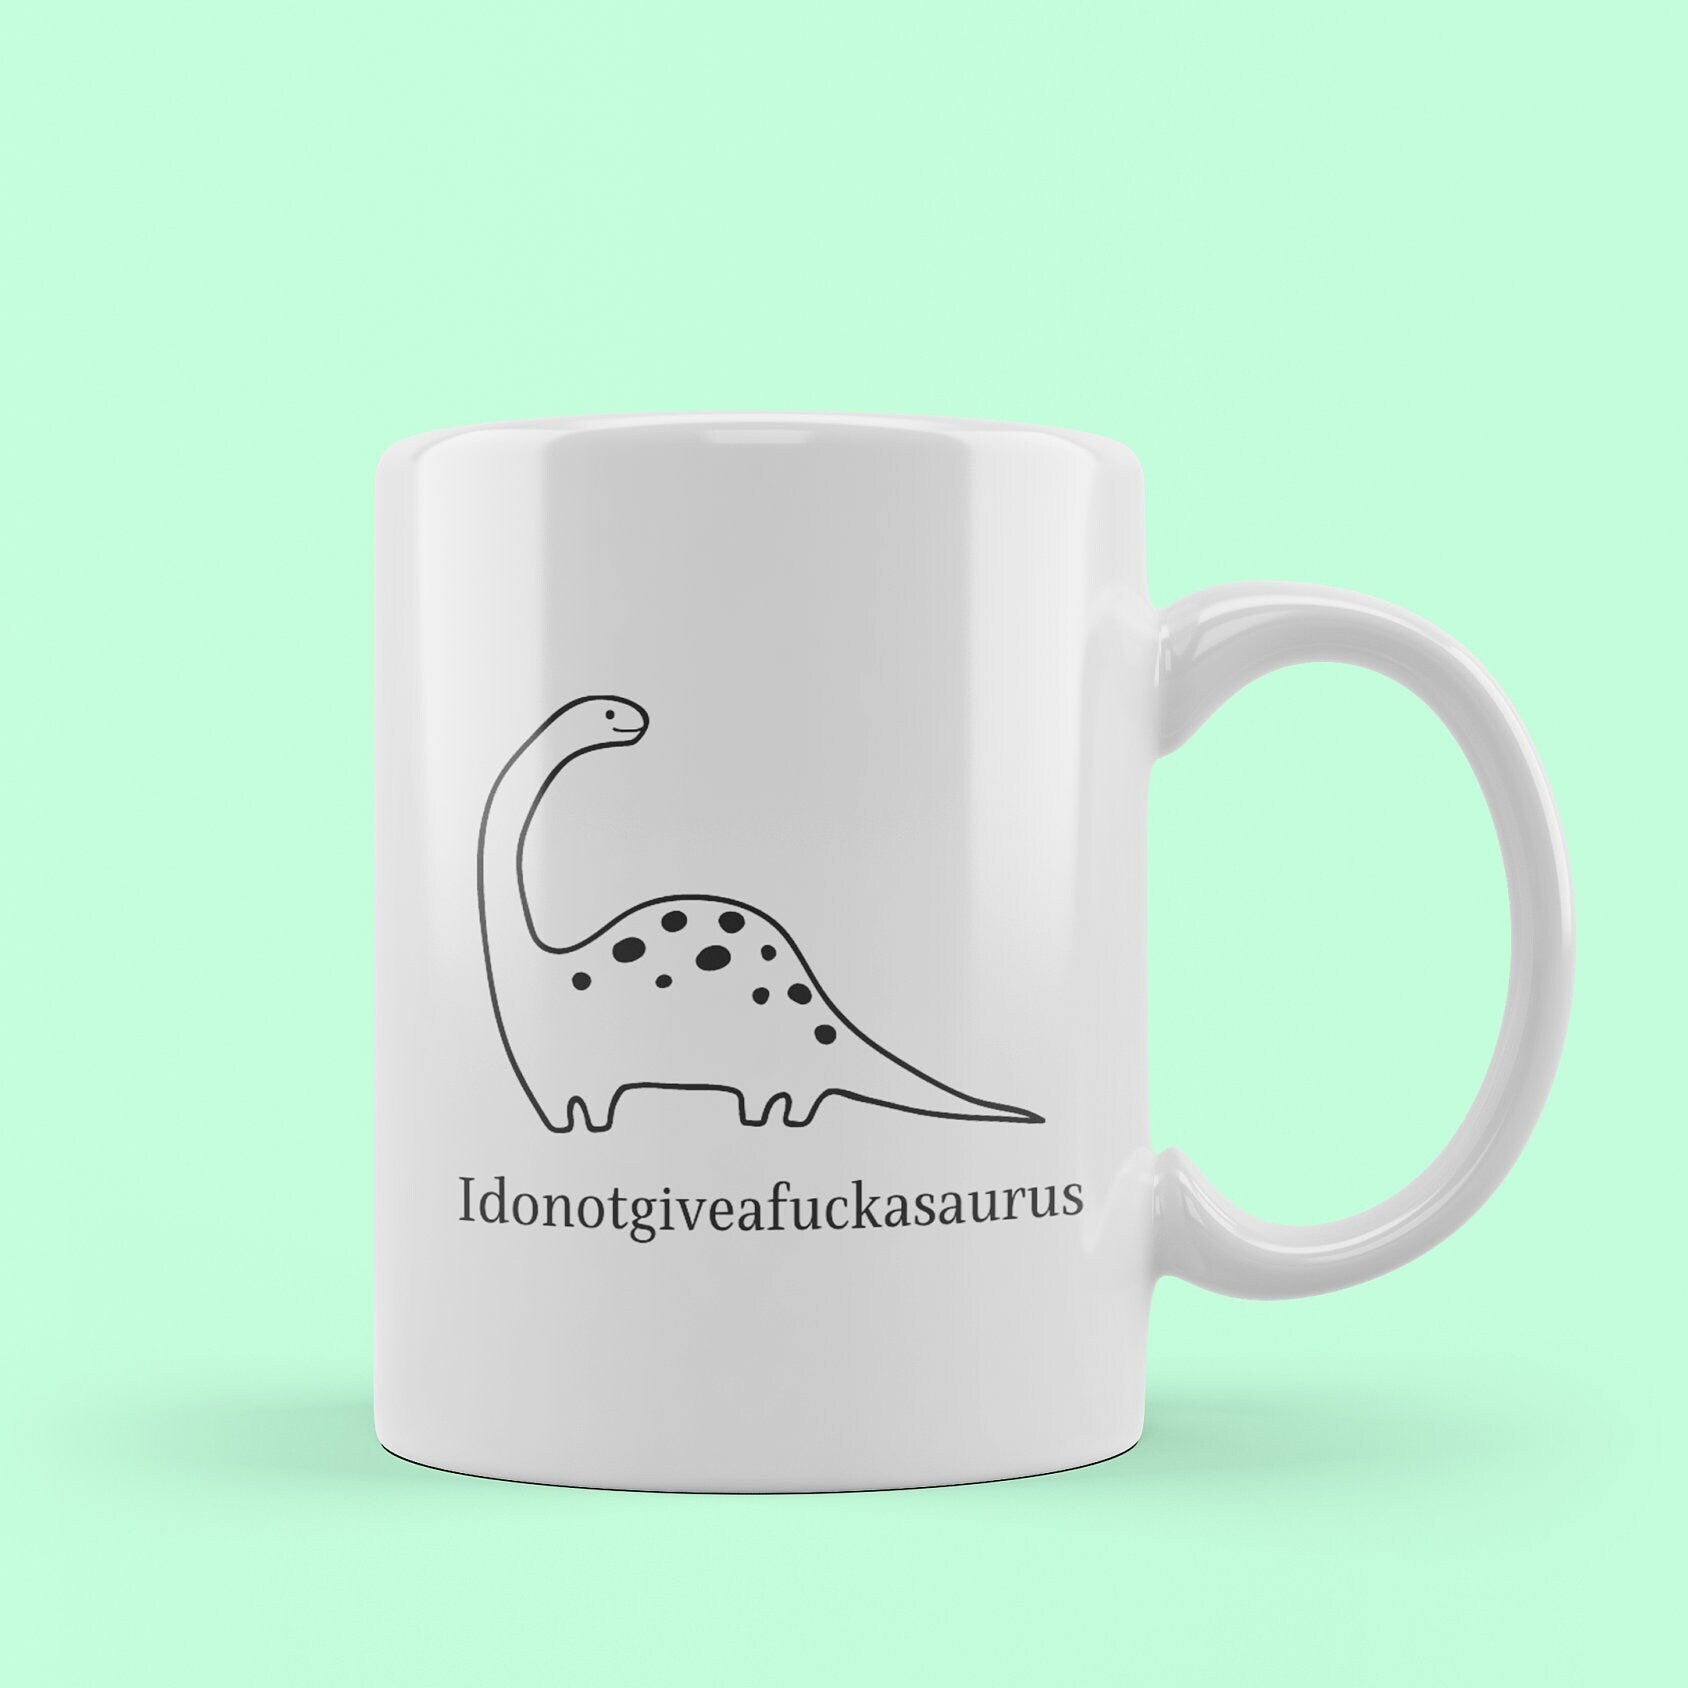 joke mug. rude quote mug. dinosaur mug. I dont give a fuckasaurus quote. fun minimalist mug.